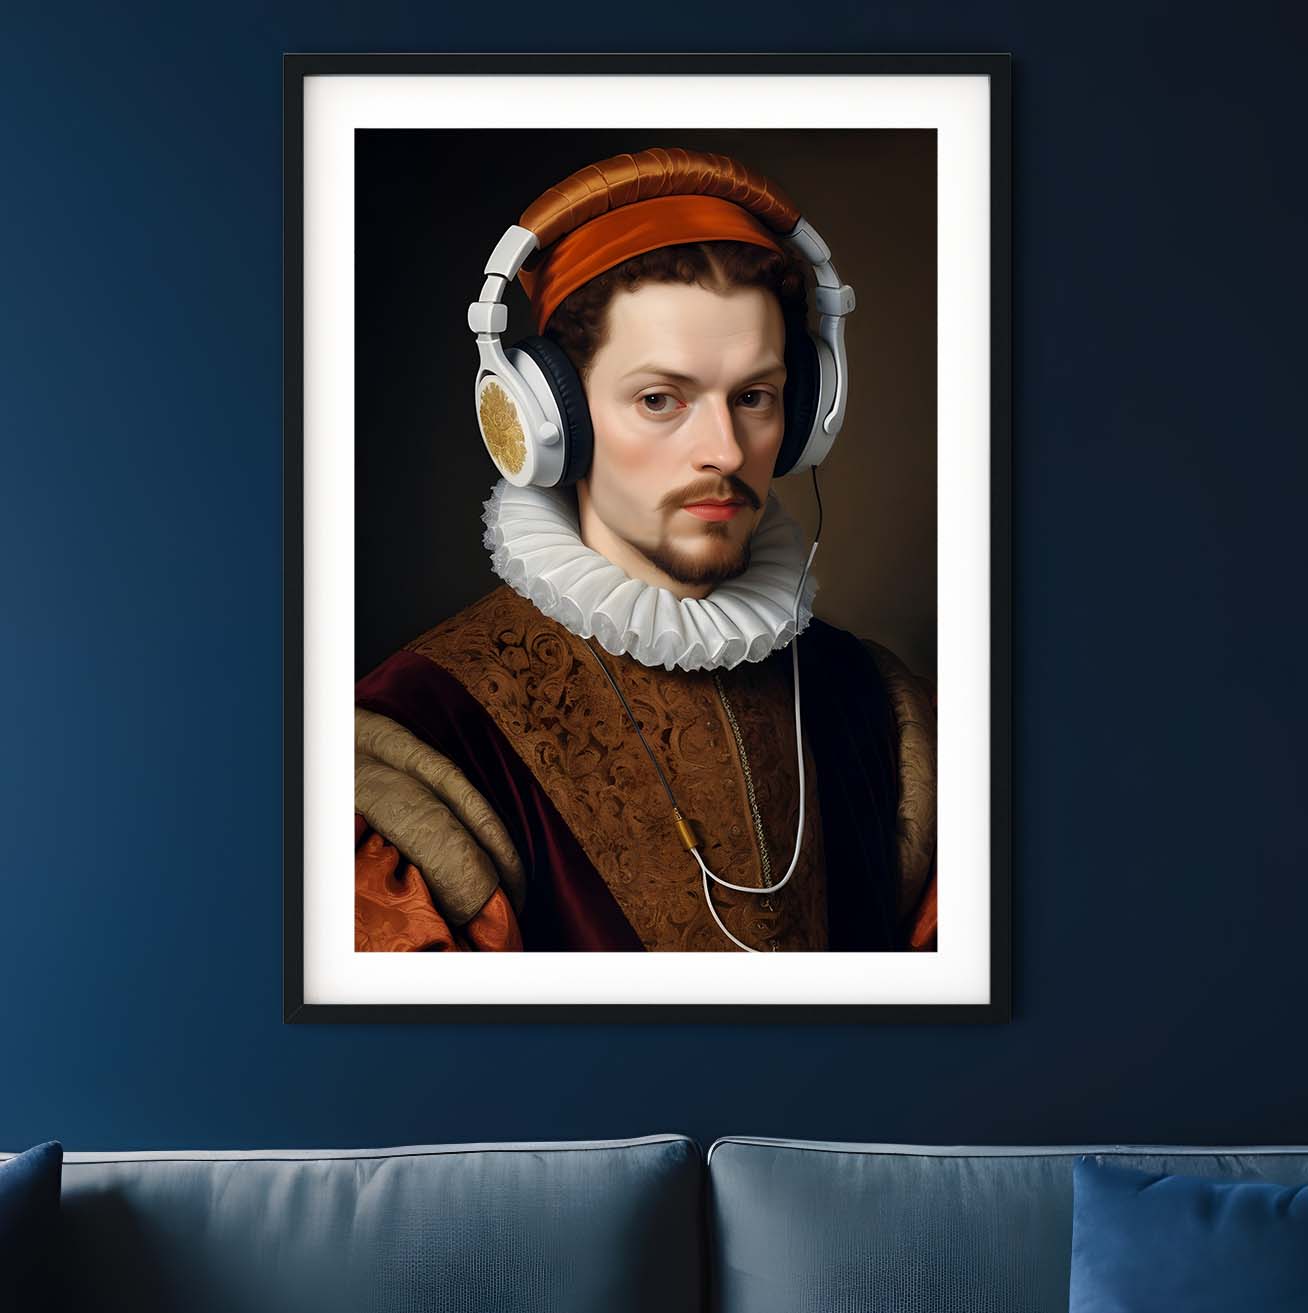 a portrait of a man wearing headphones